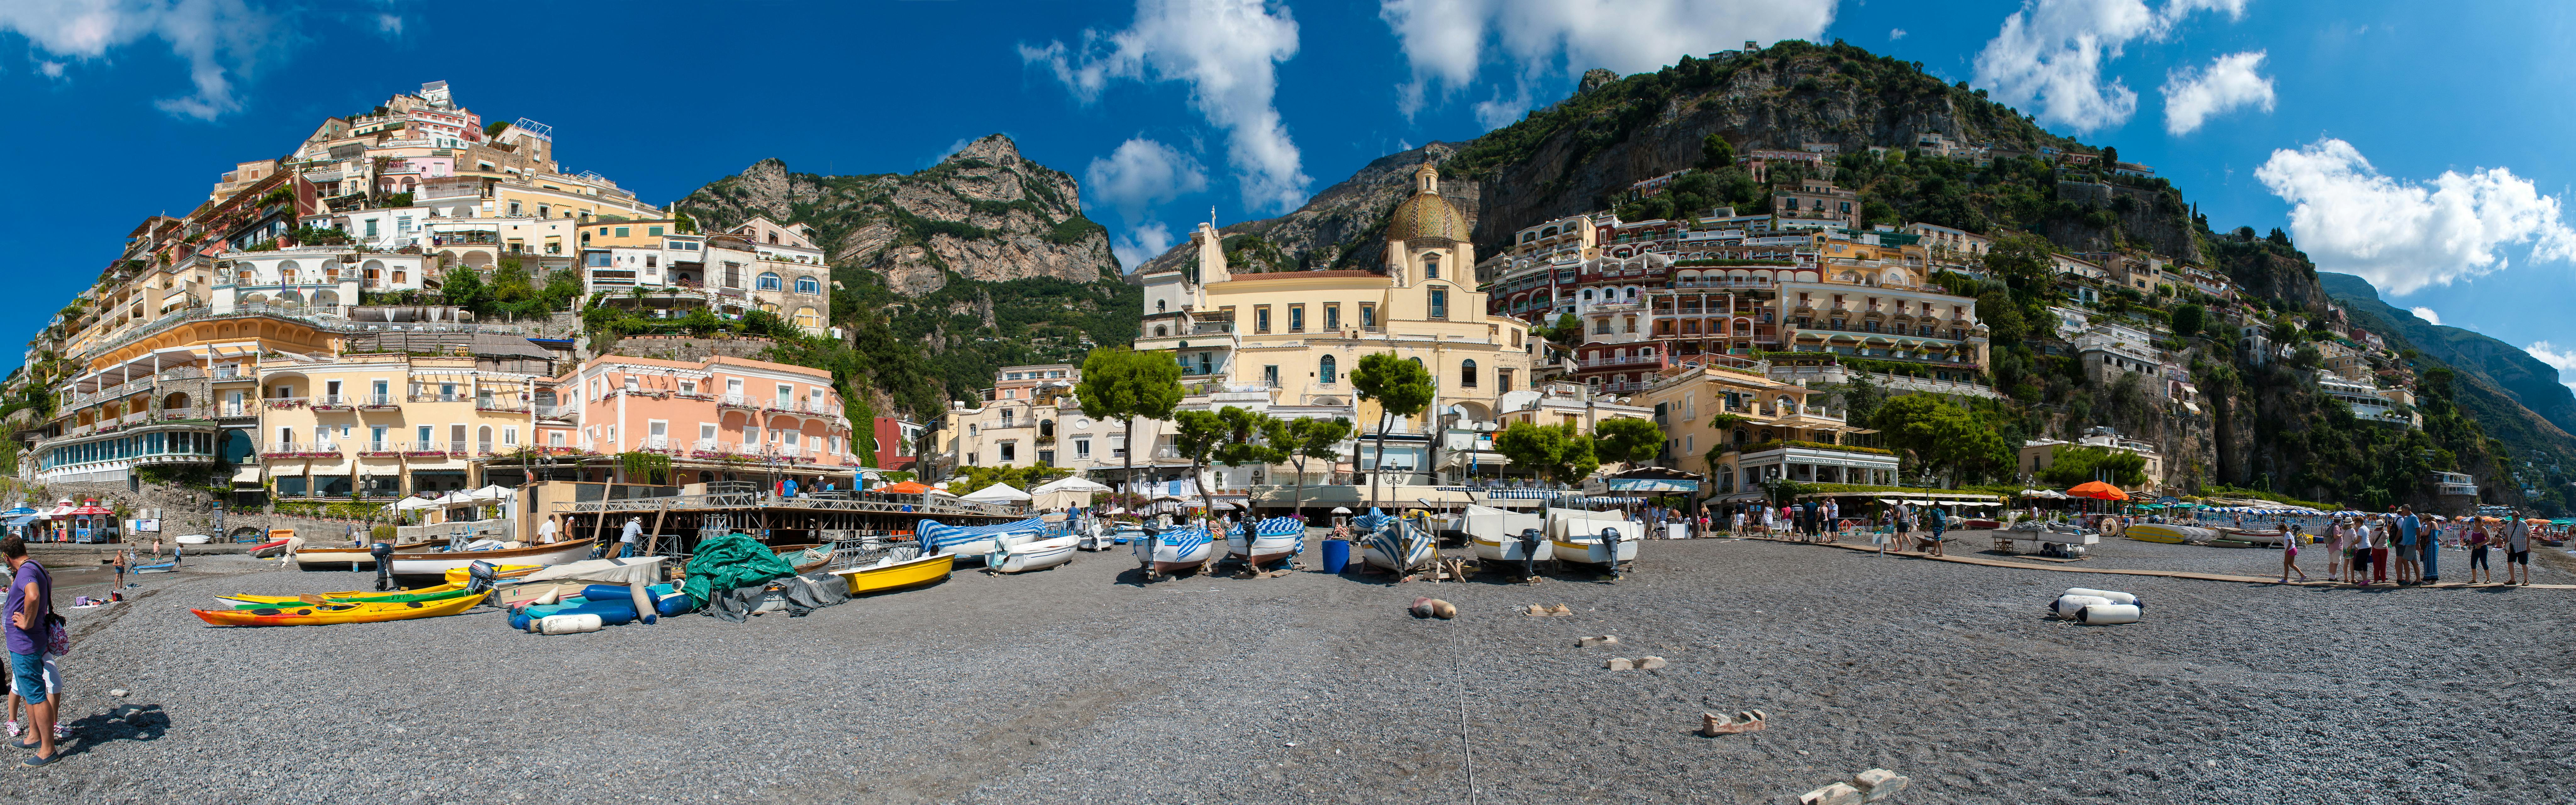 Amalfi Coast shore excursion with private driver Musement